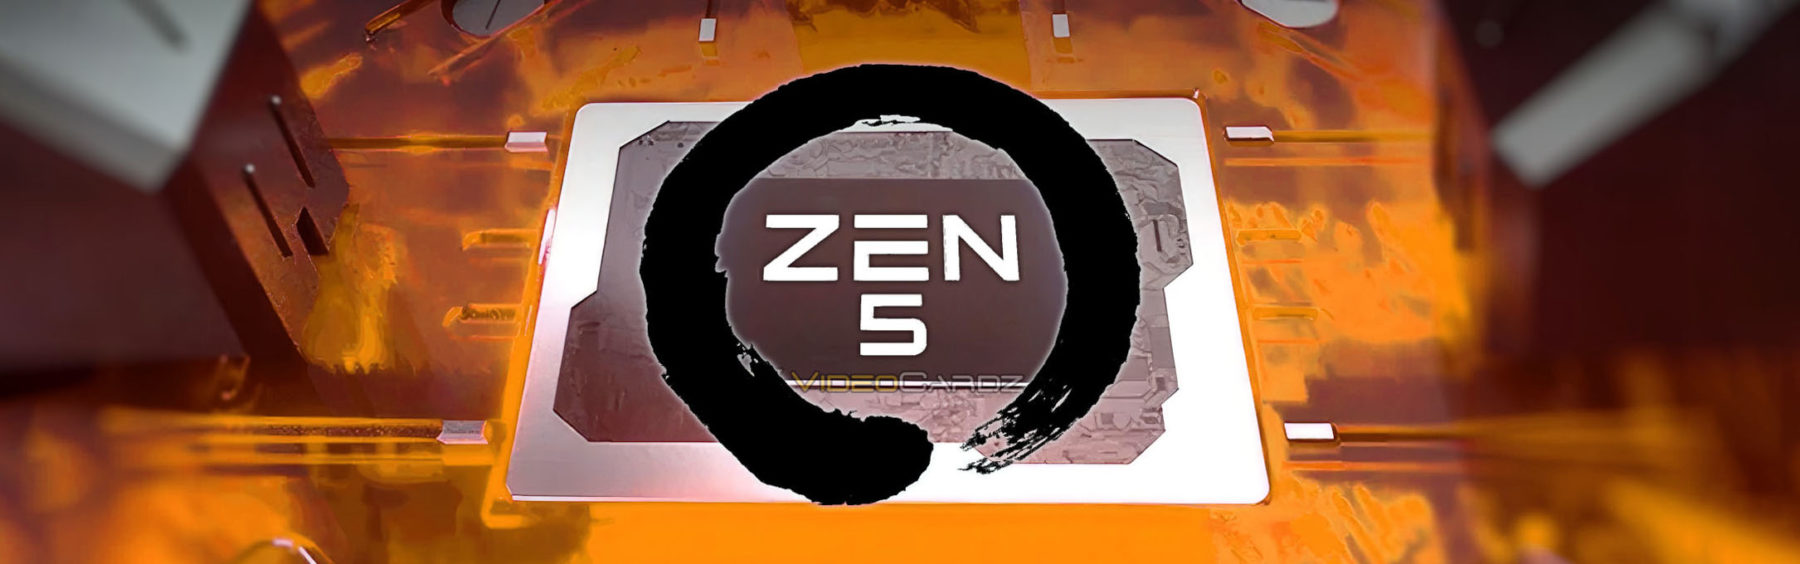 AMD seemingly confirms Ryzen 7000 launch line-up